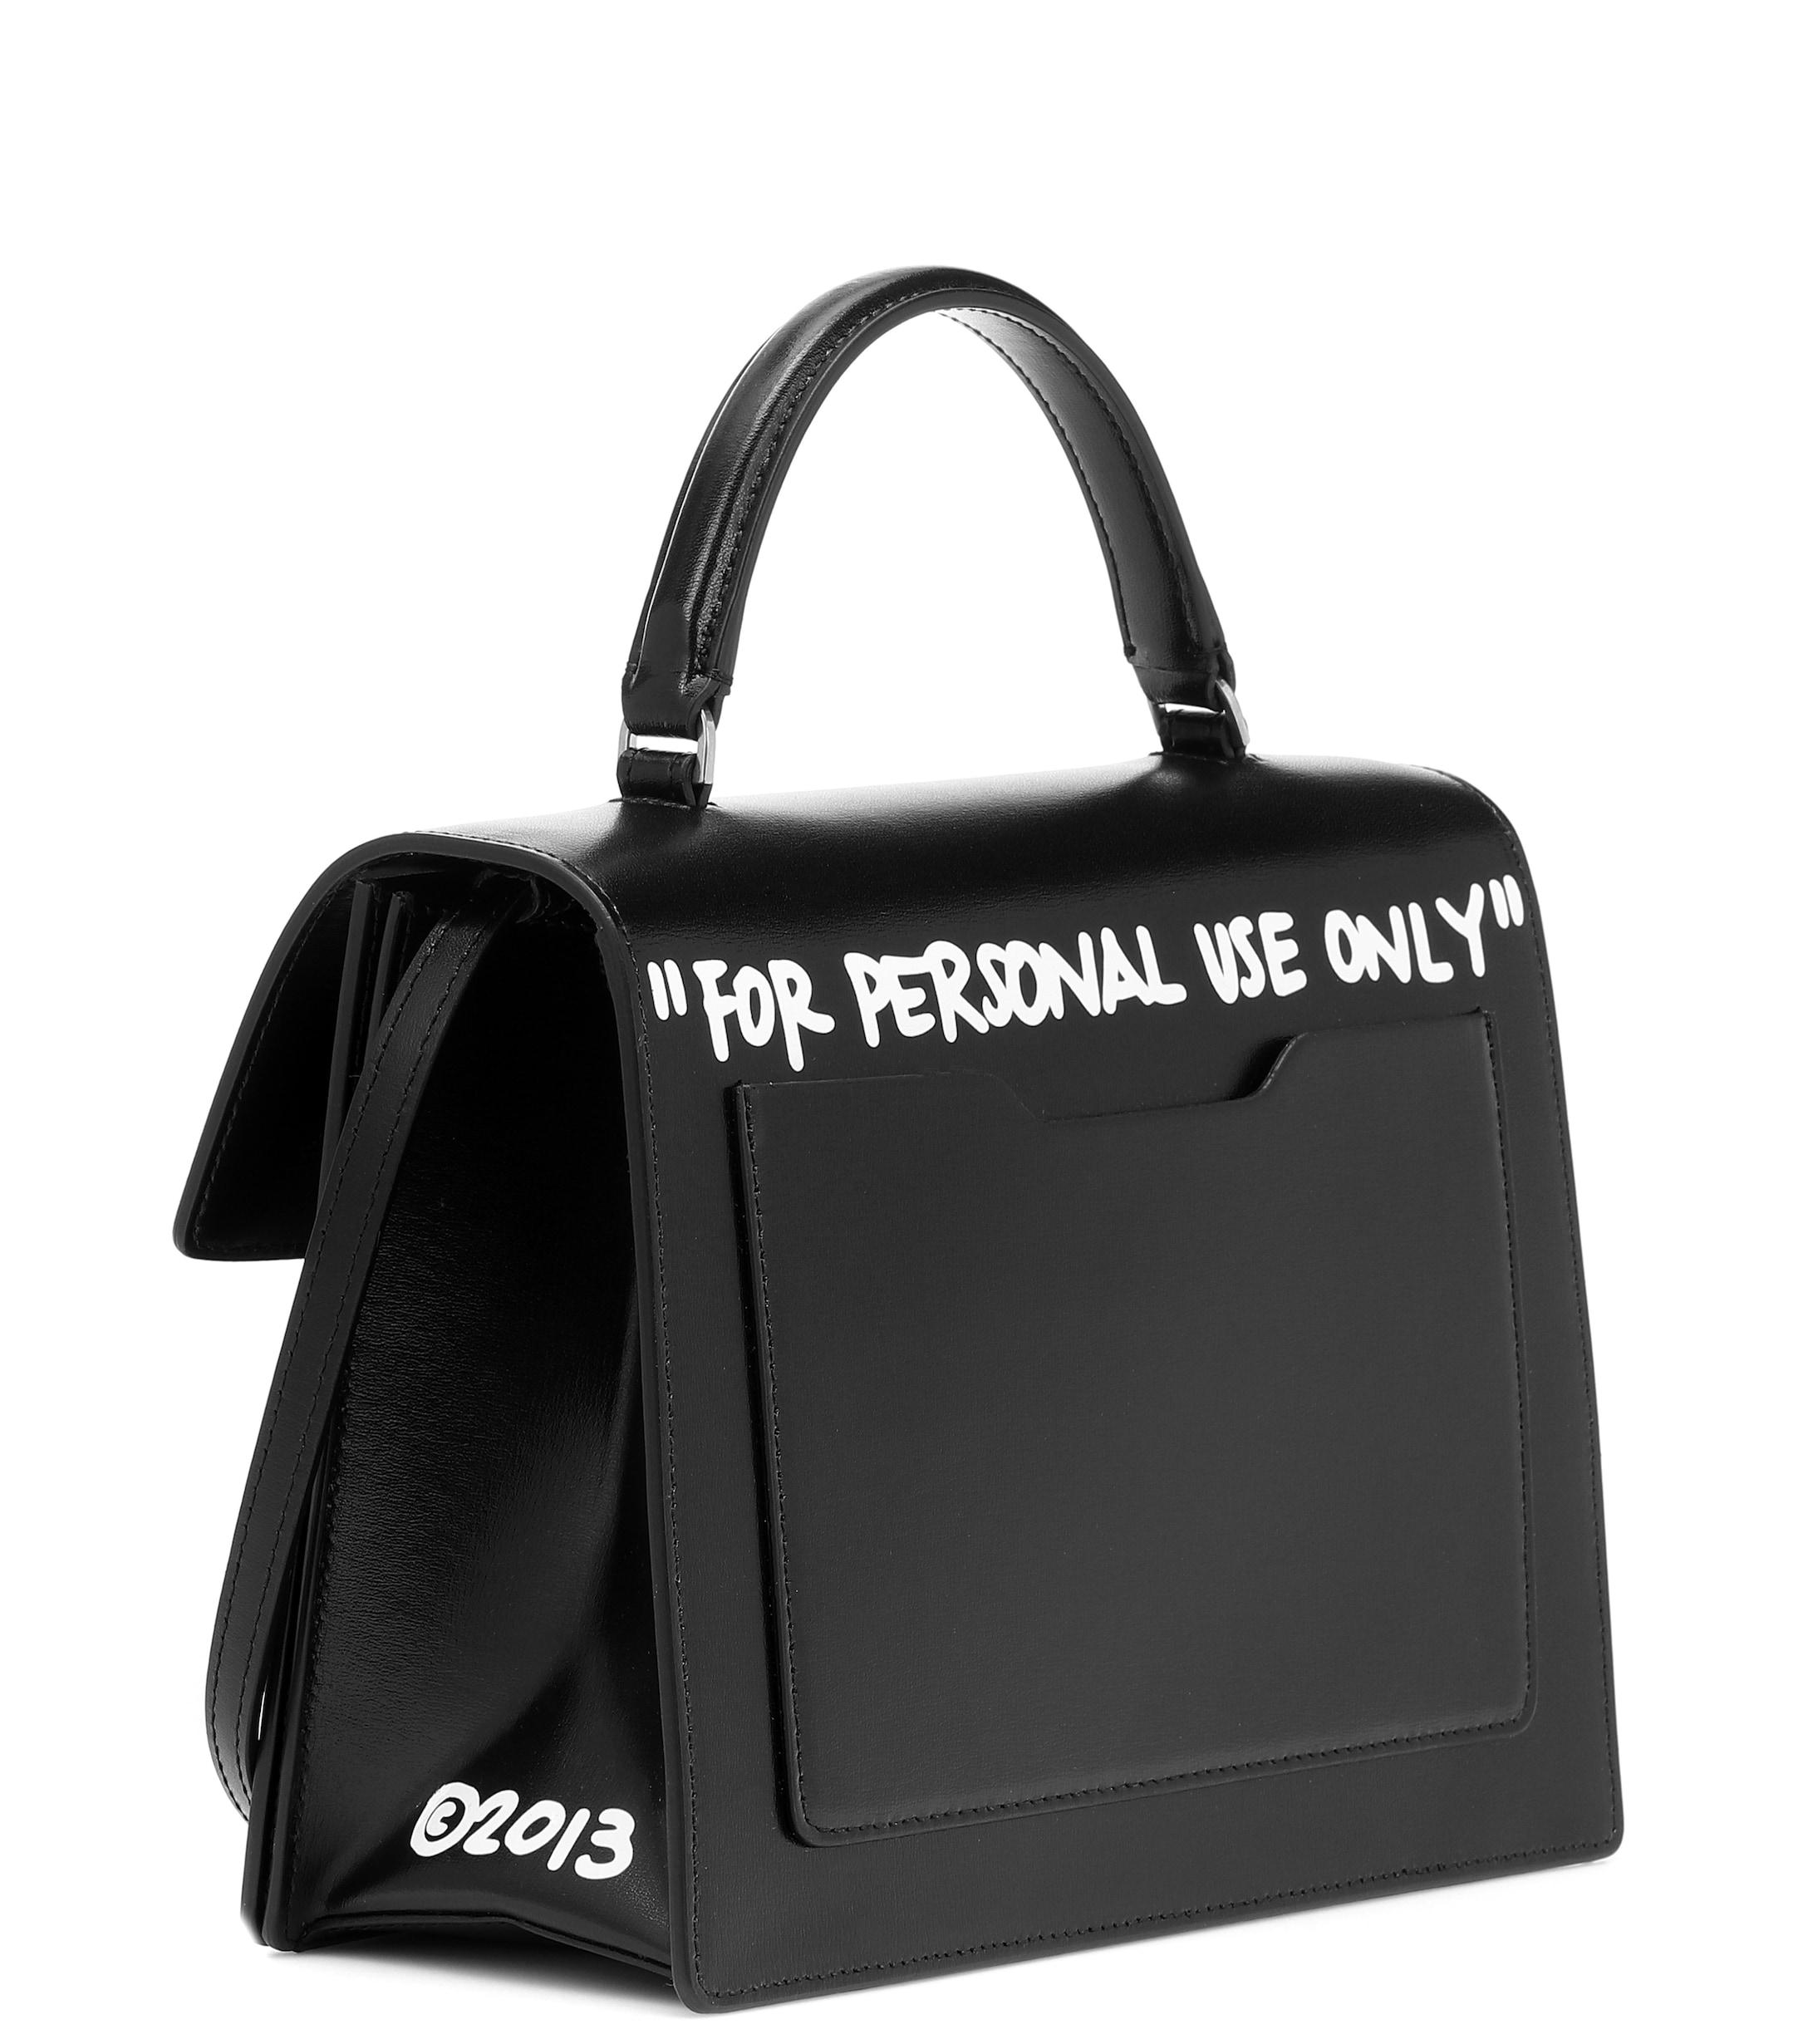 NIB OFF-WHITE C/O VIRGIL ABLOH Black Leather New 1.4 Jitney Bag Size OS  $1240